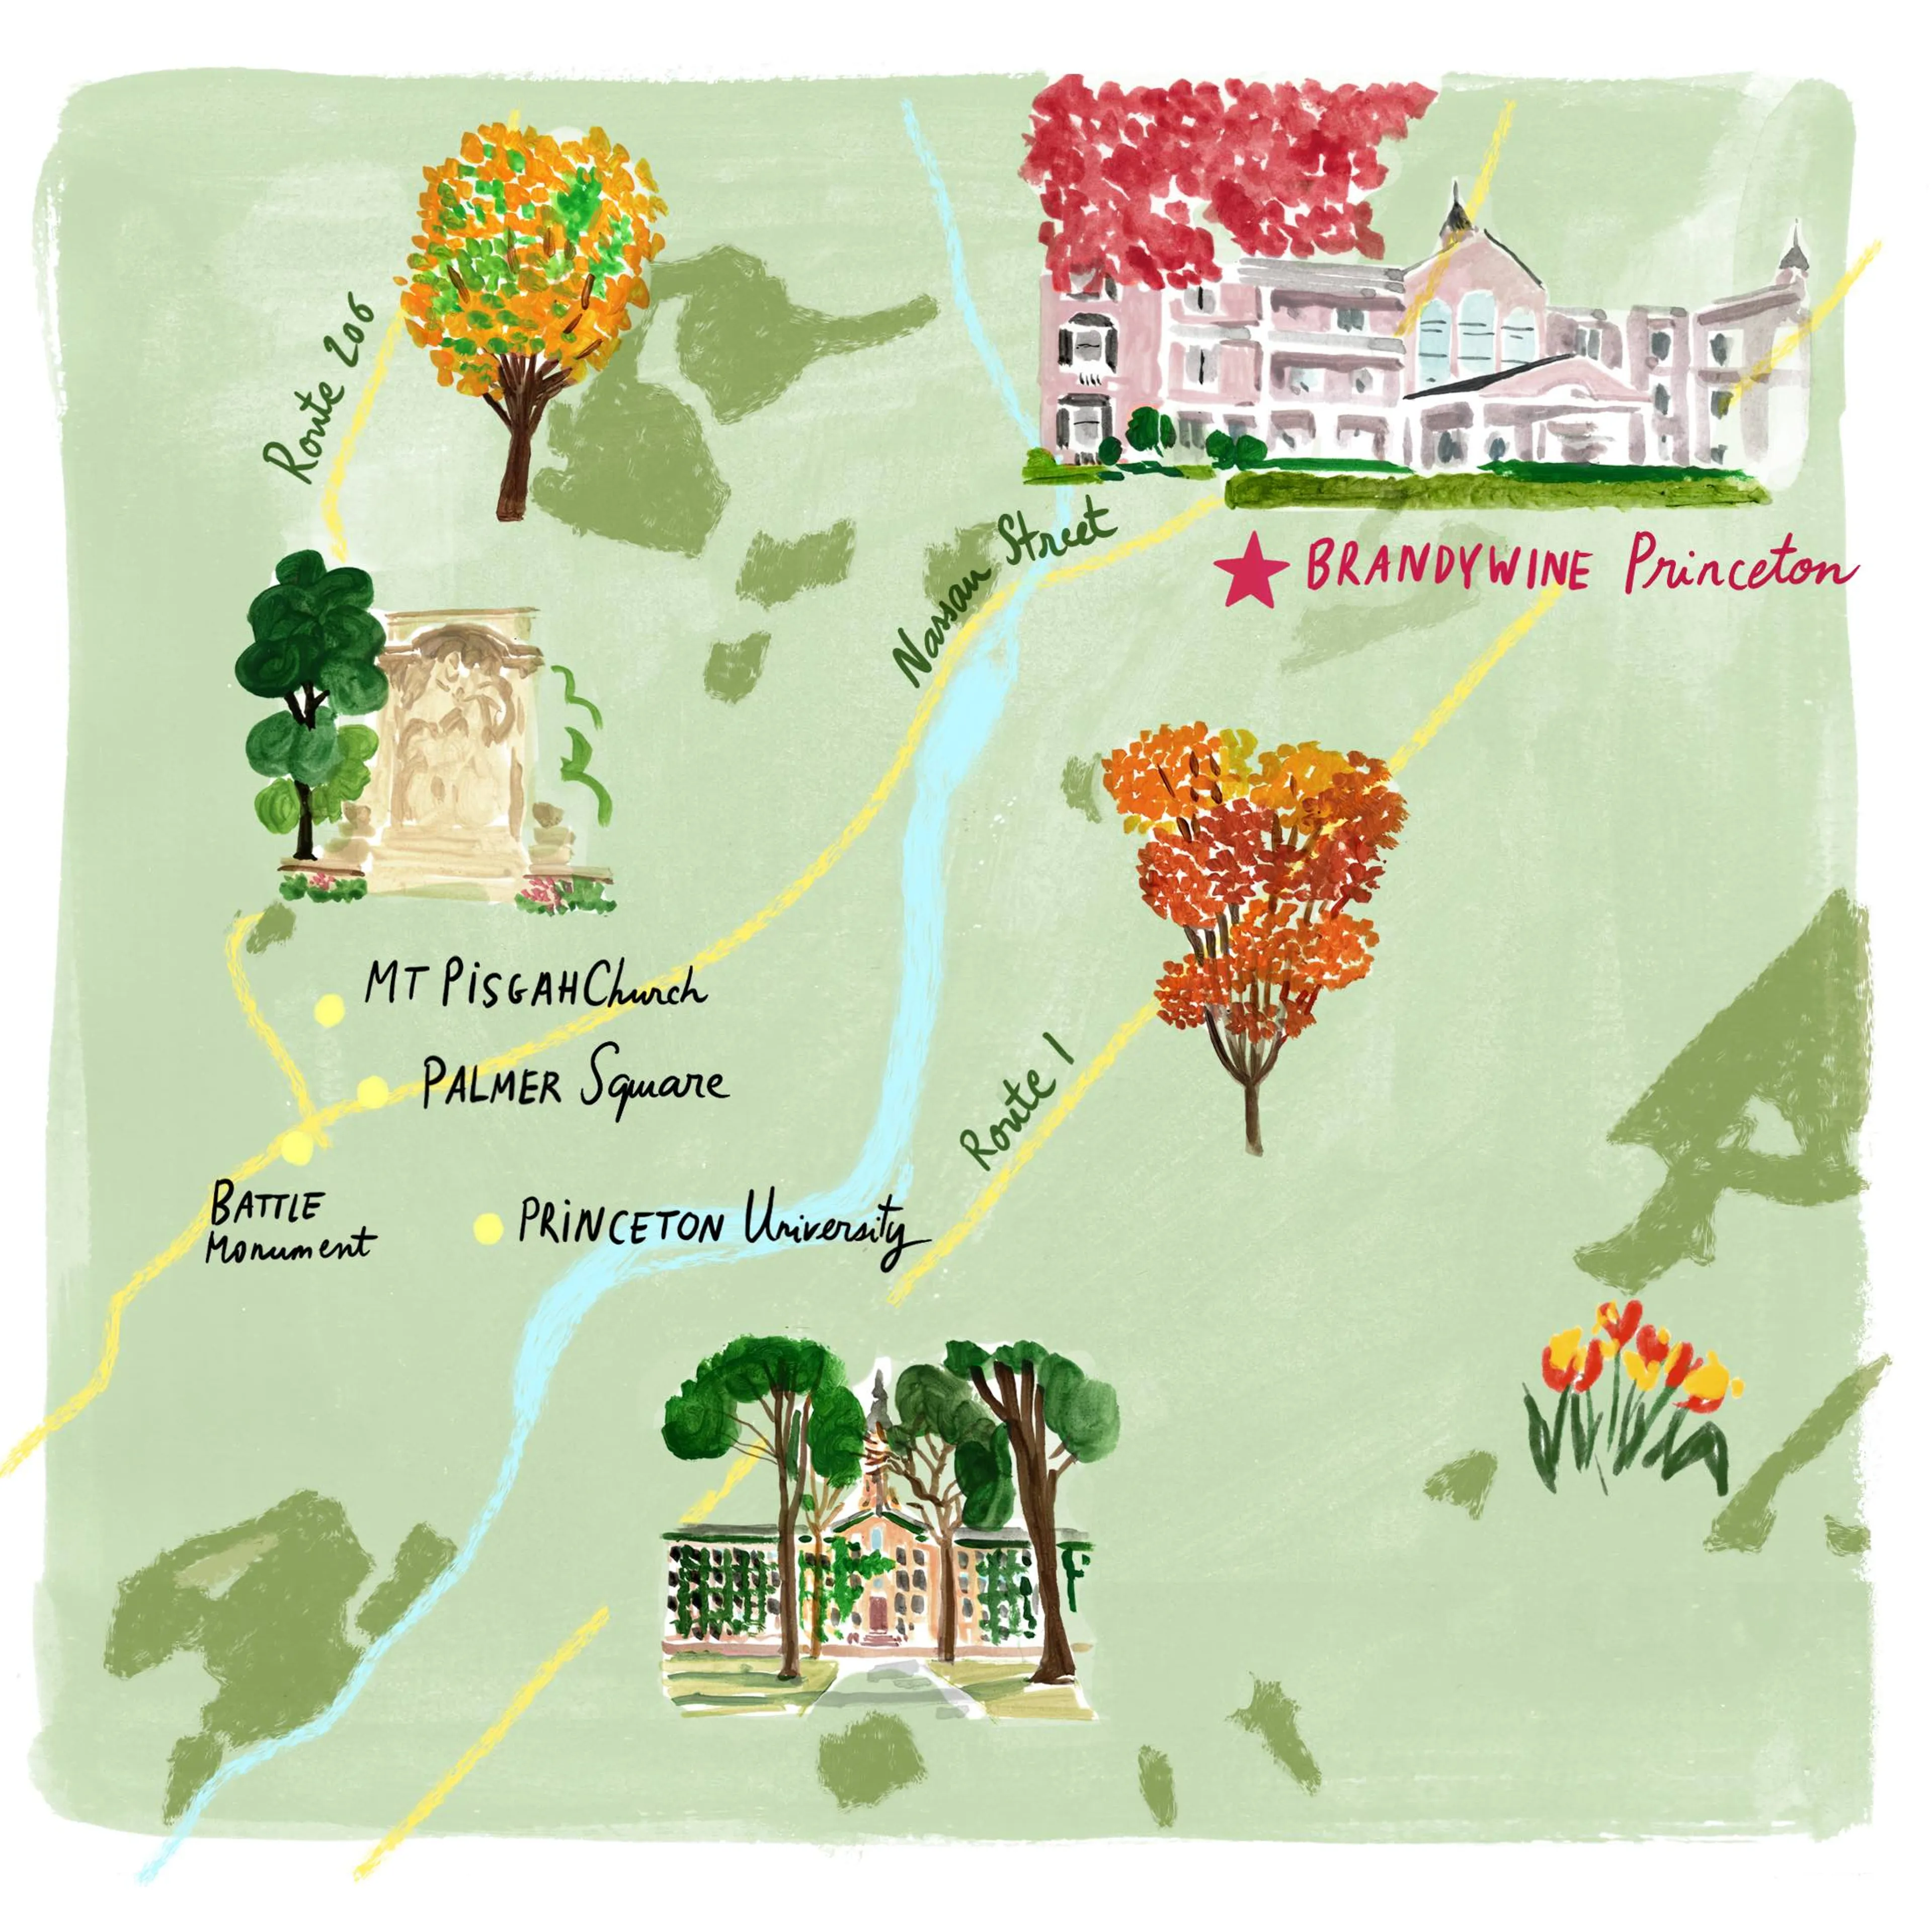 Hand-illustrated map of major roads and landmarks surrounding Brandywine Princeton in Princeton, NJ